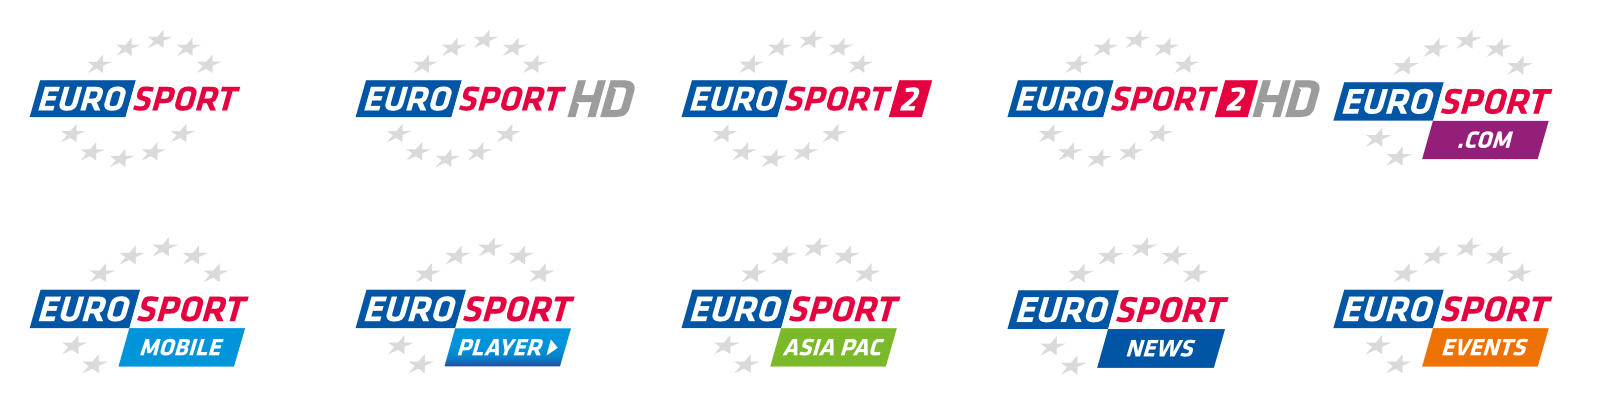 Евроспорт логотип. Канал Евроспорт. Телеканал Евроспорт логотип.